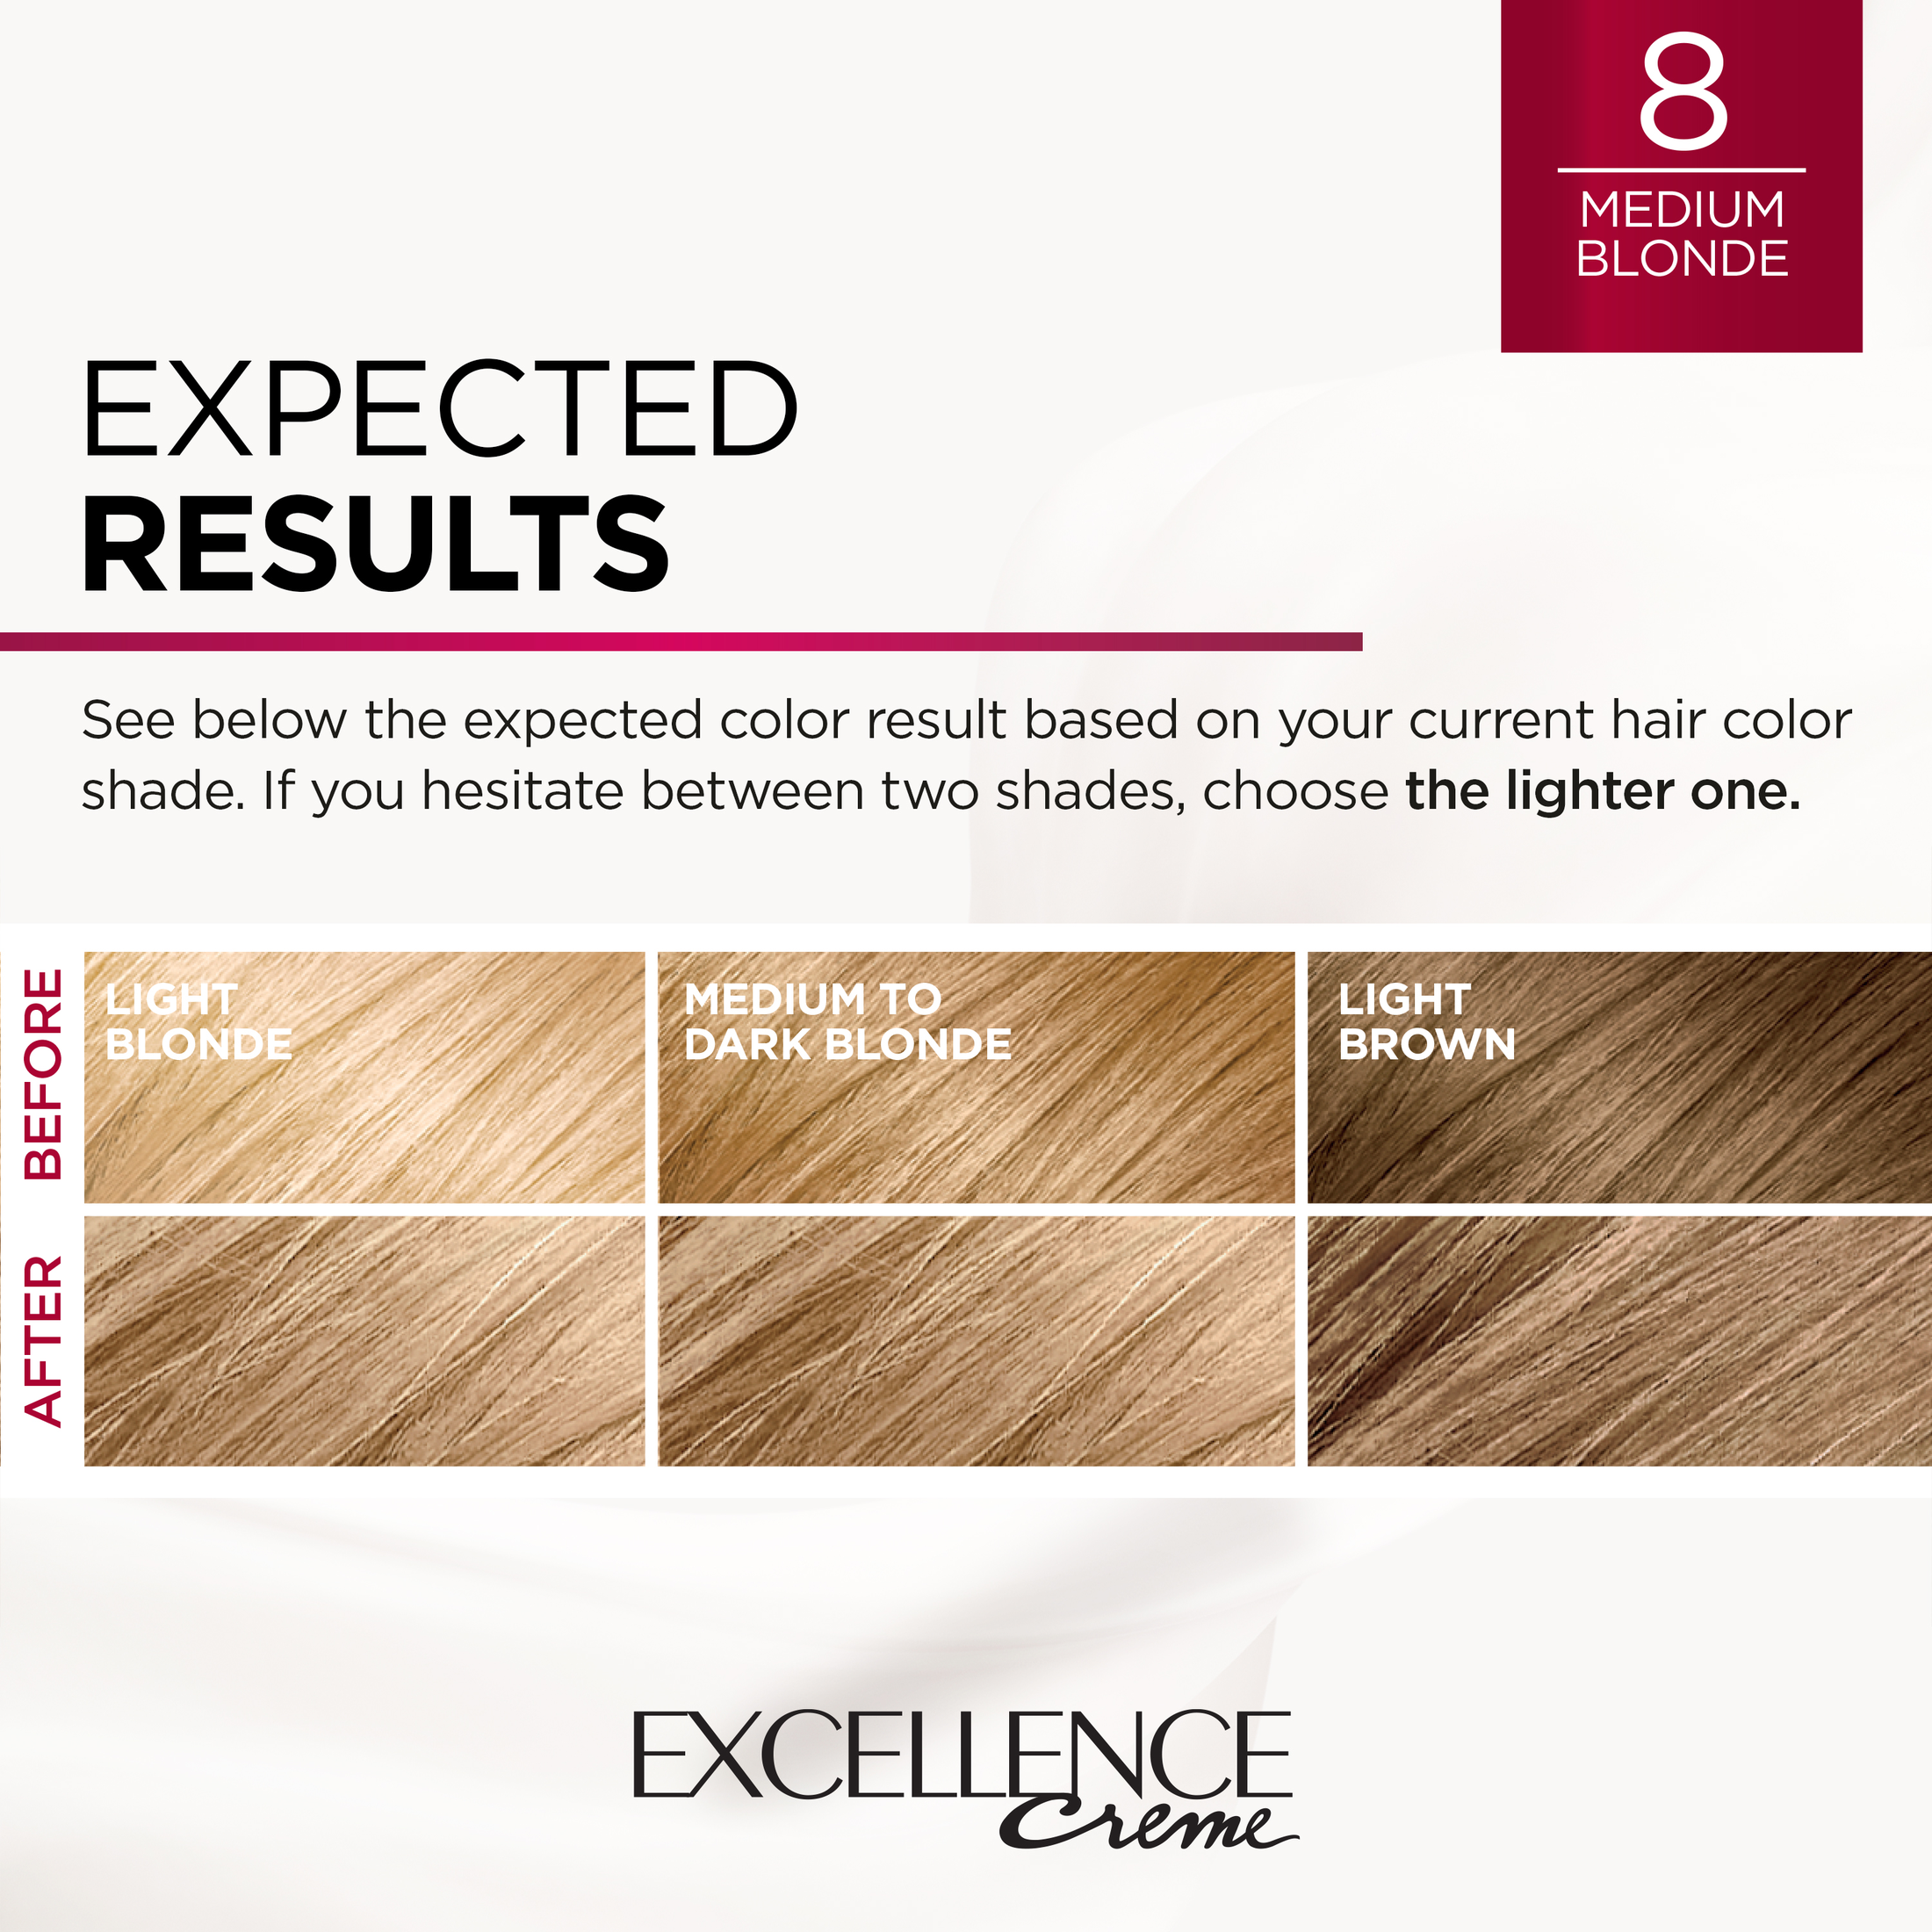 L'Oreal Paris Excellence Creme Permanent Hair Color, 8 Medium Blonde - image 5 of 8